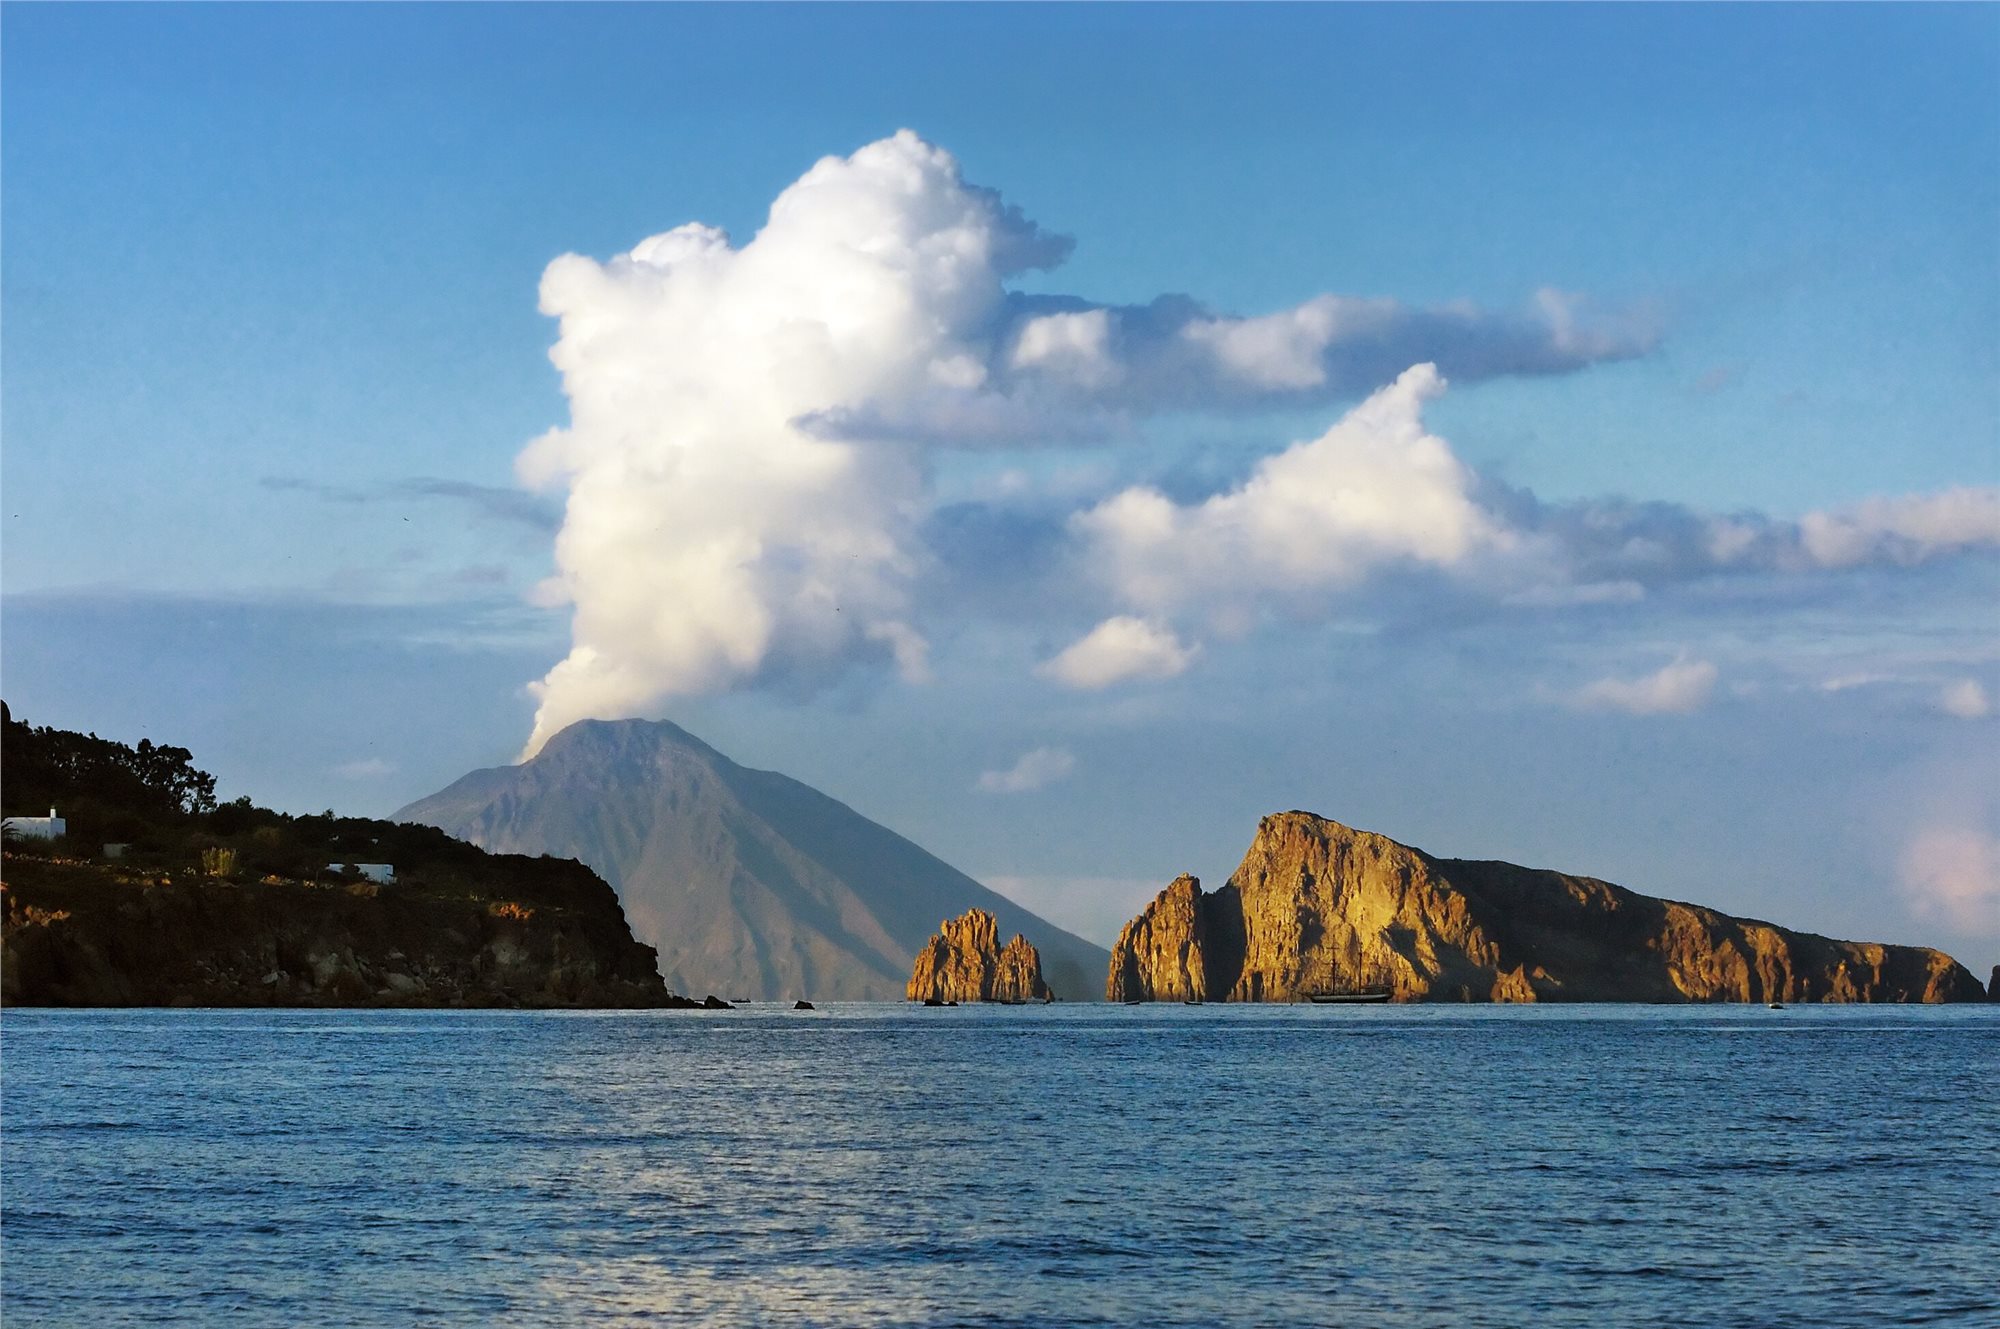 Liparské ostrovy - sopka Stromboli